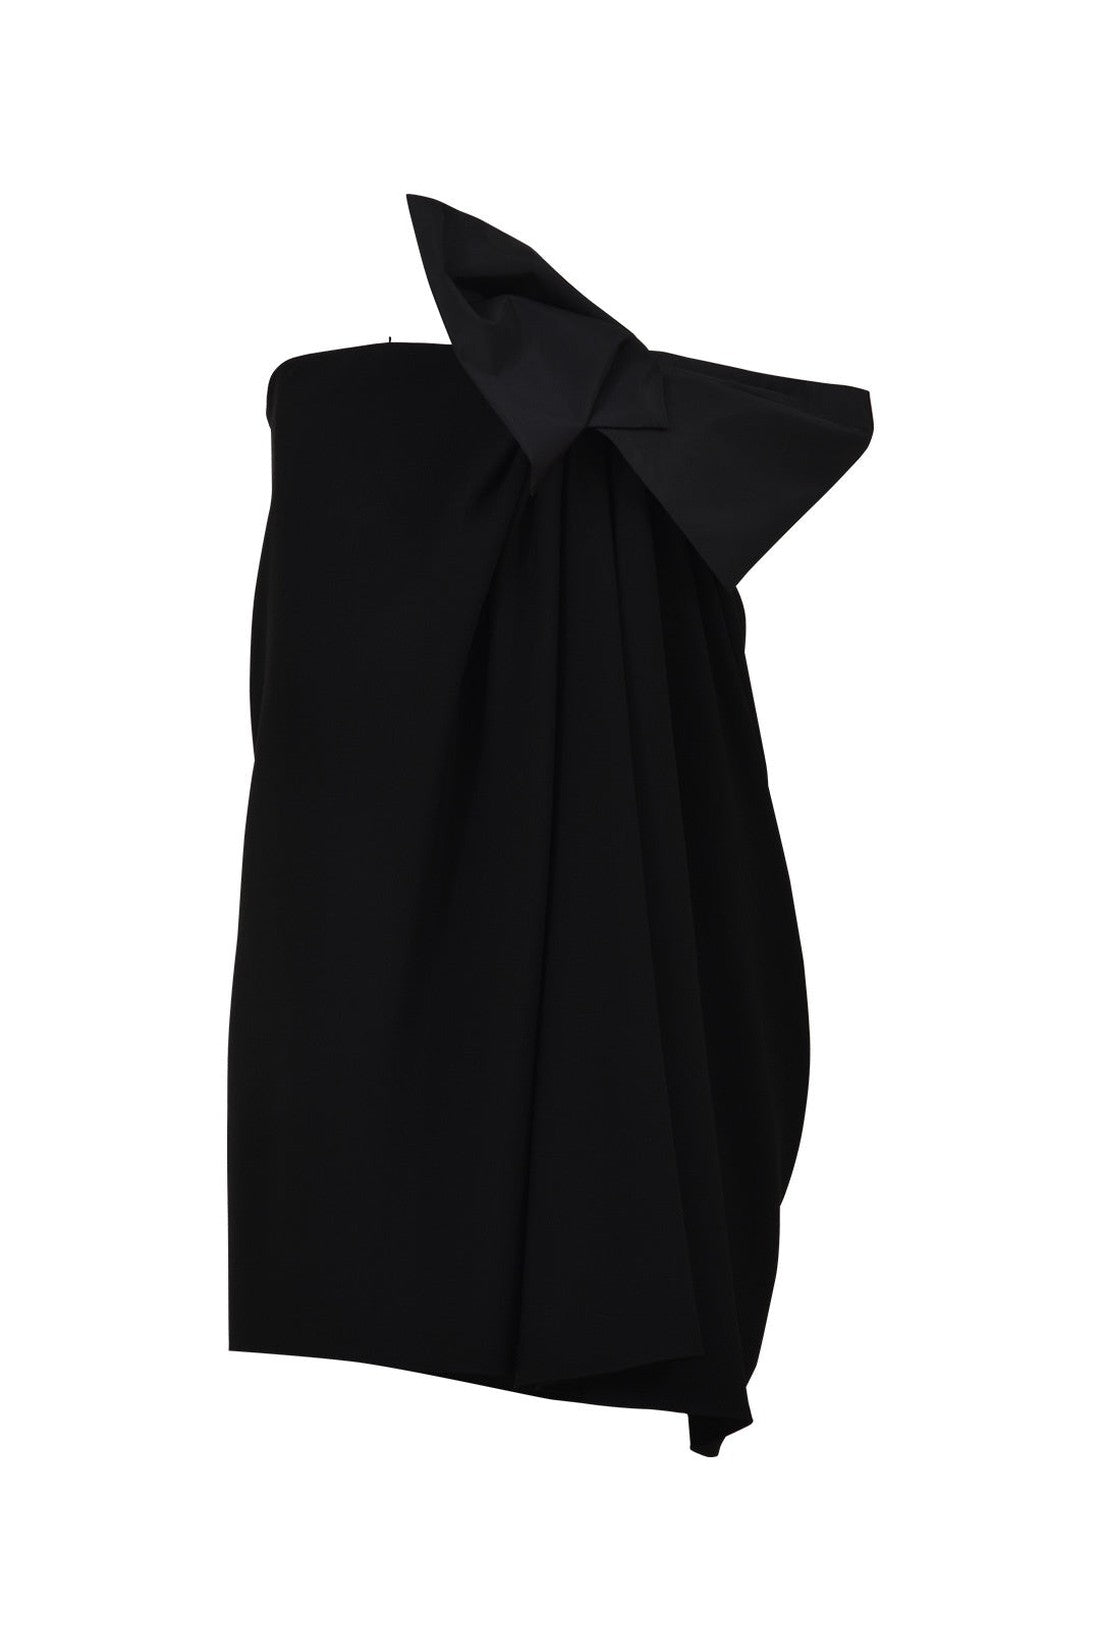 Mini Black Dress with Bow